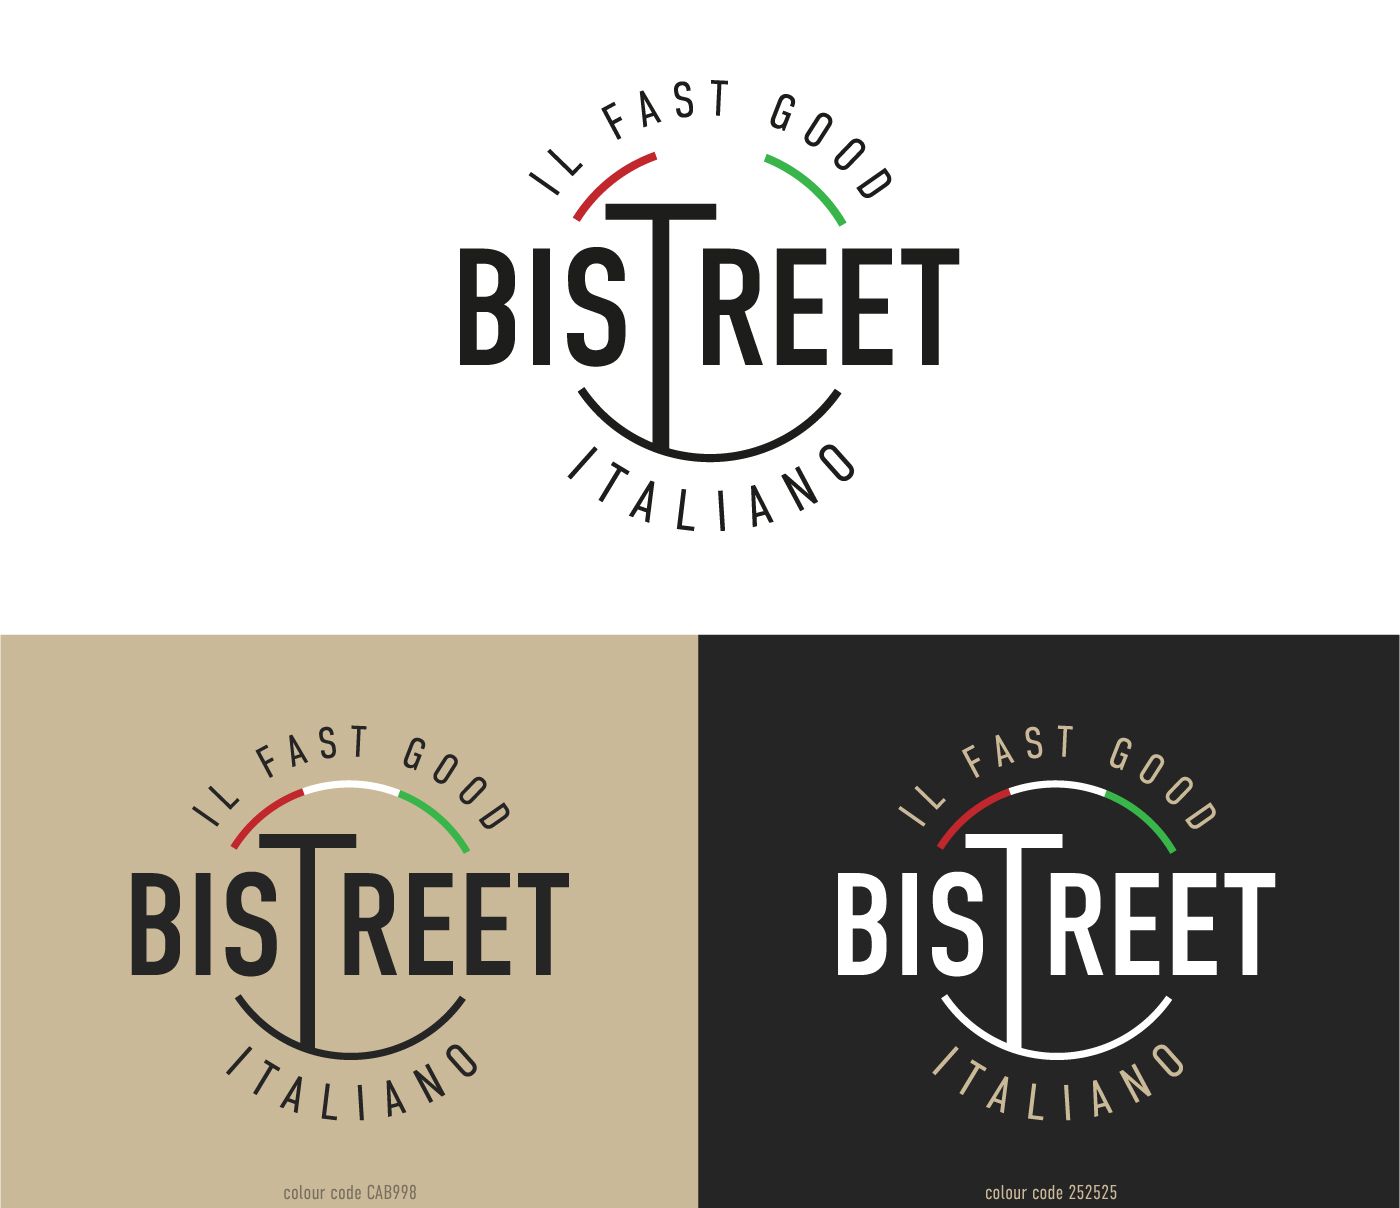 bistreet_logo